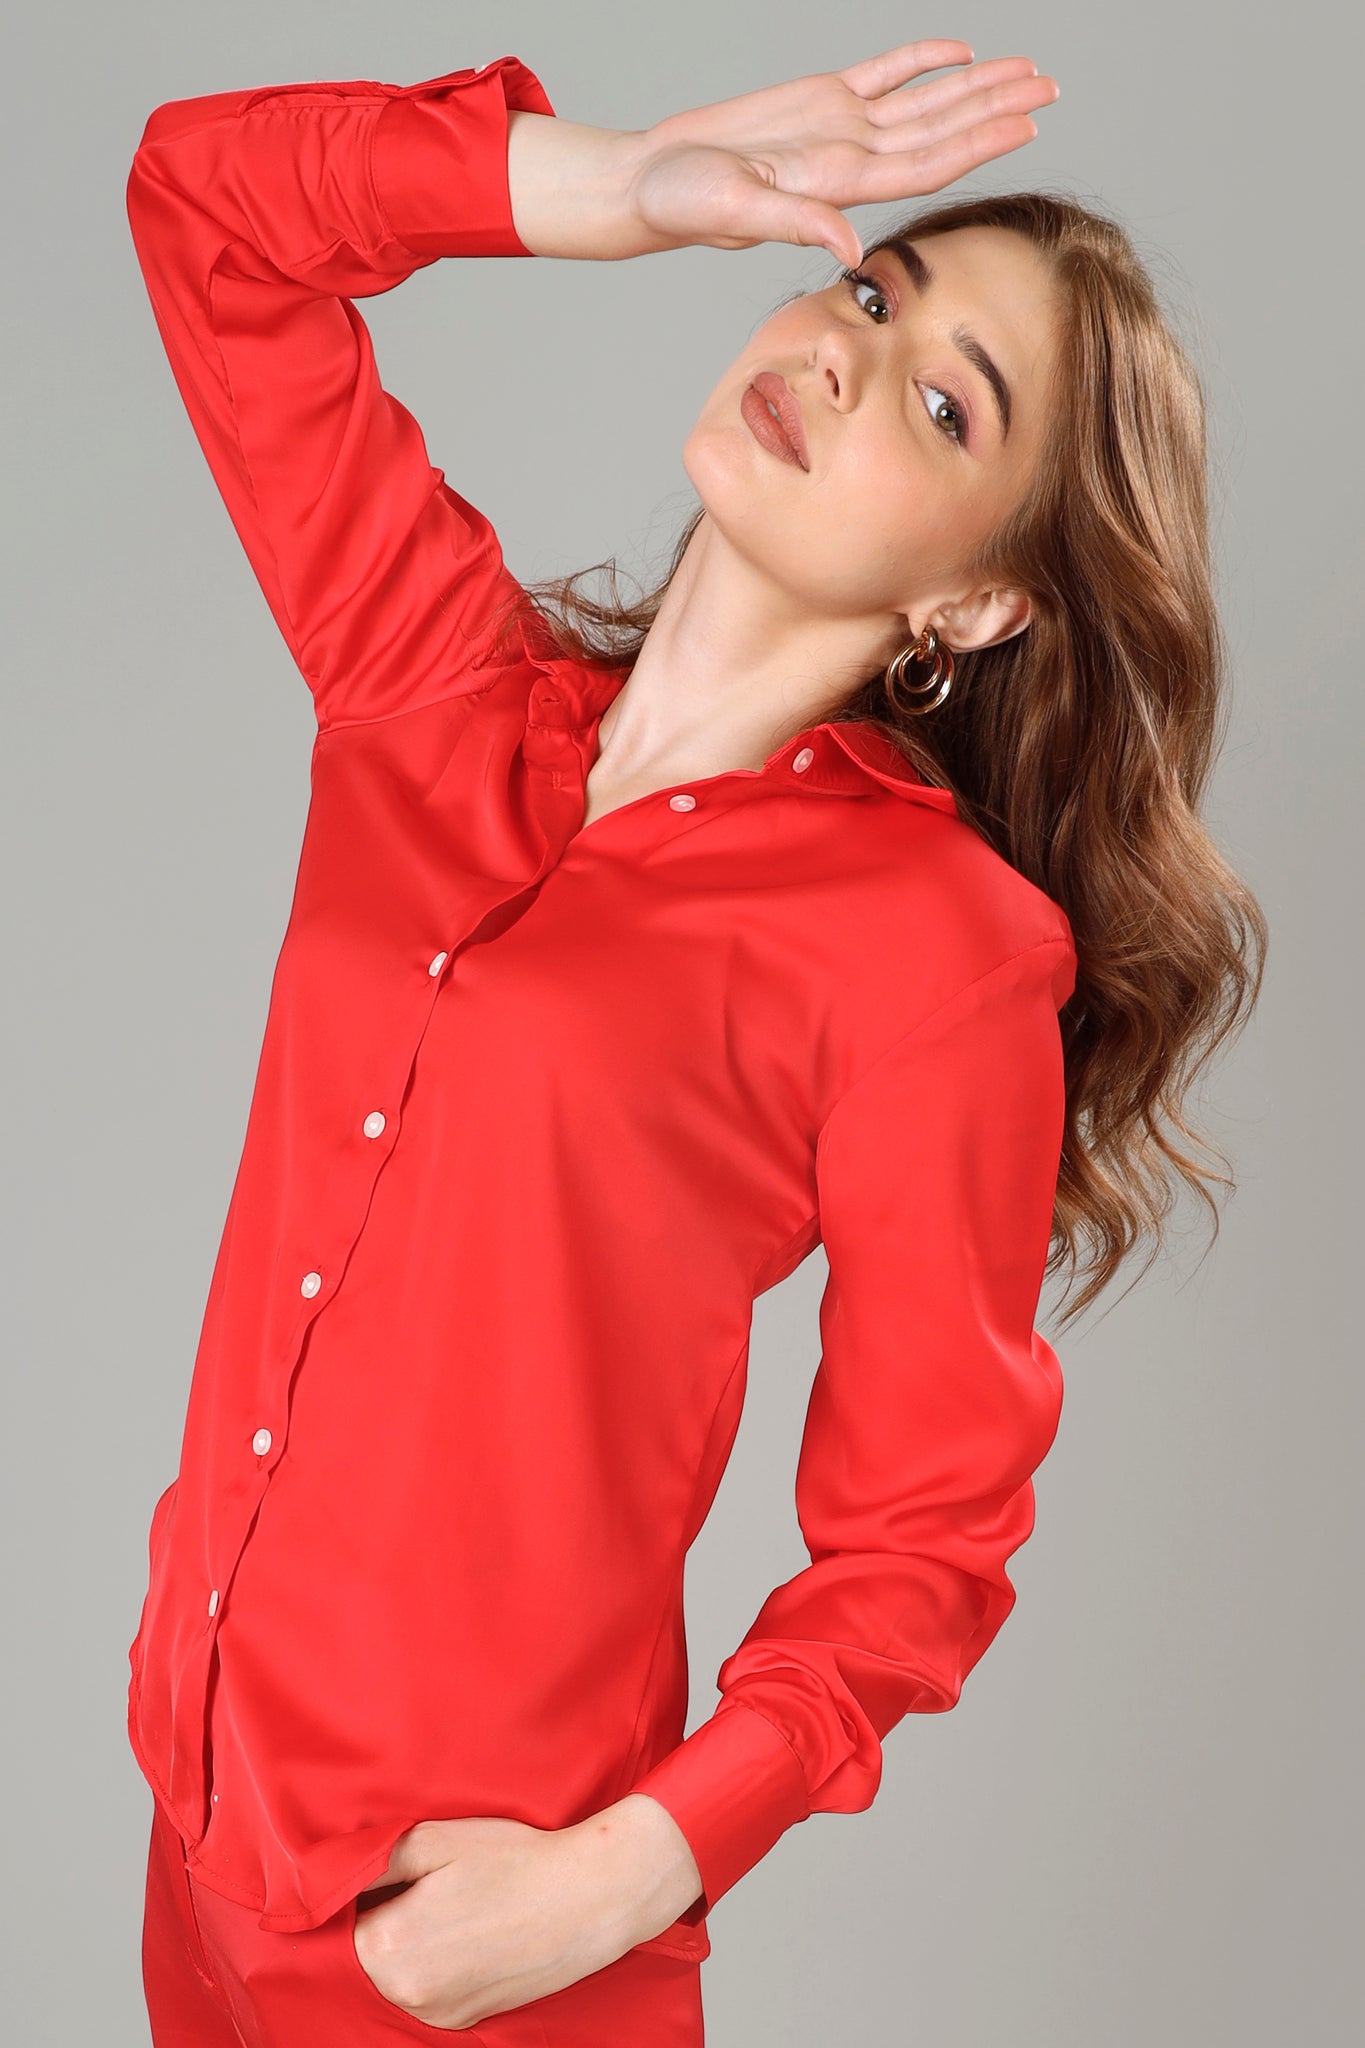 Romantic Red Shirt For Women